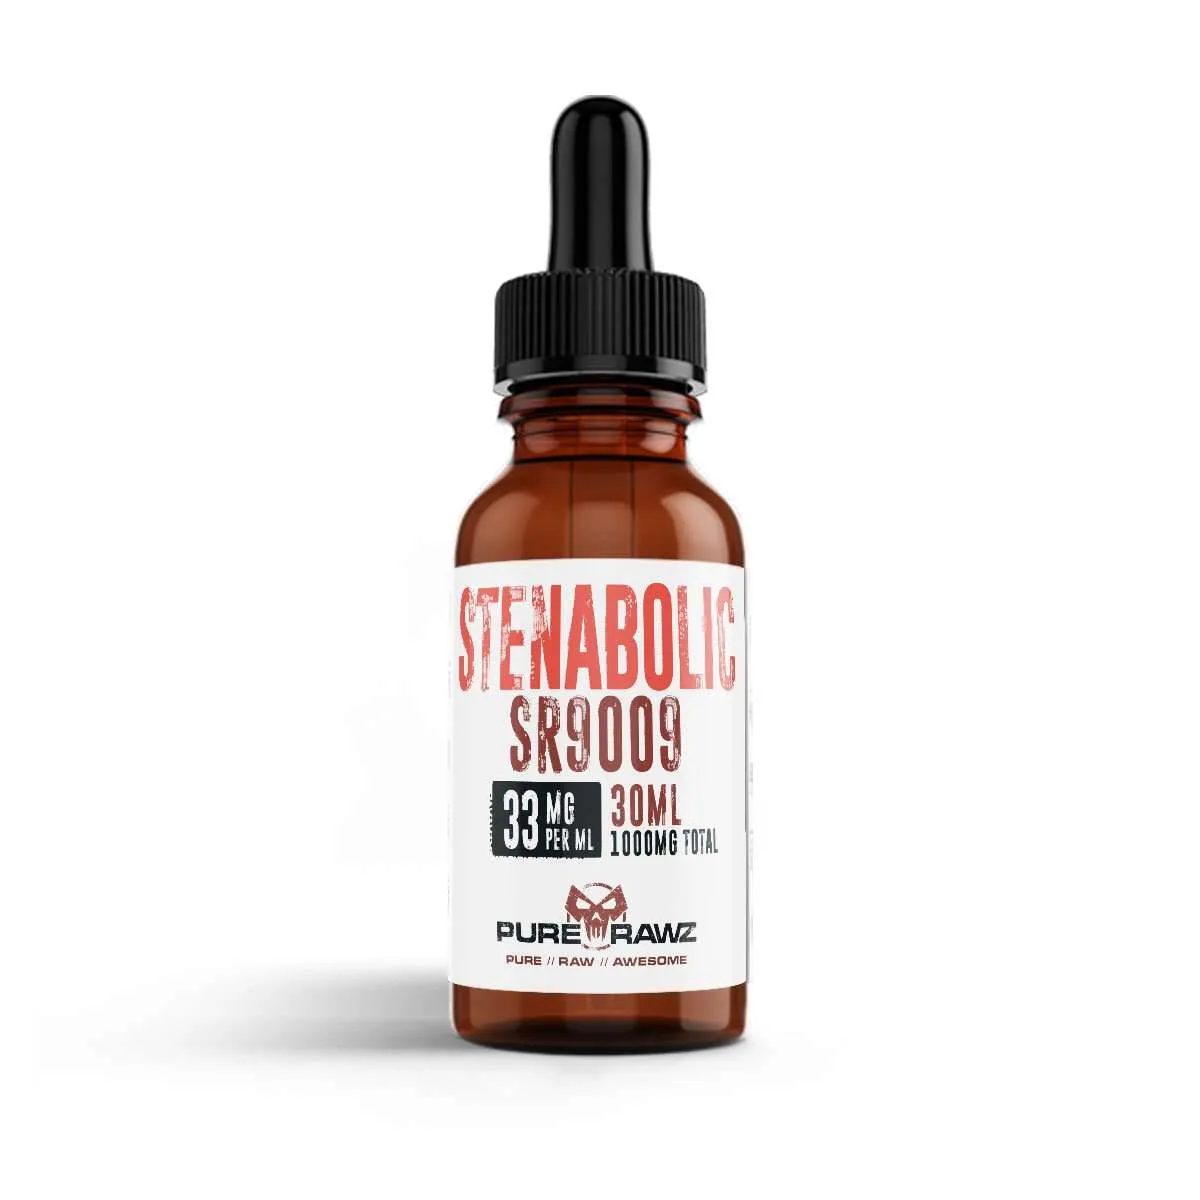 Stenabolic for Sale (Buy SR9009) | Liquid Vials